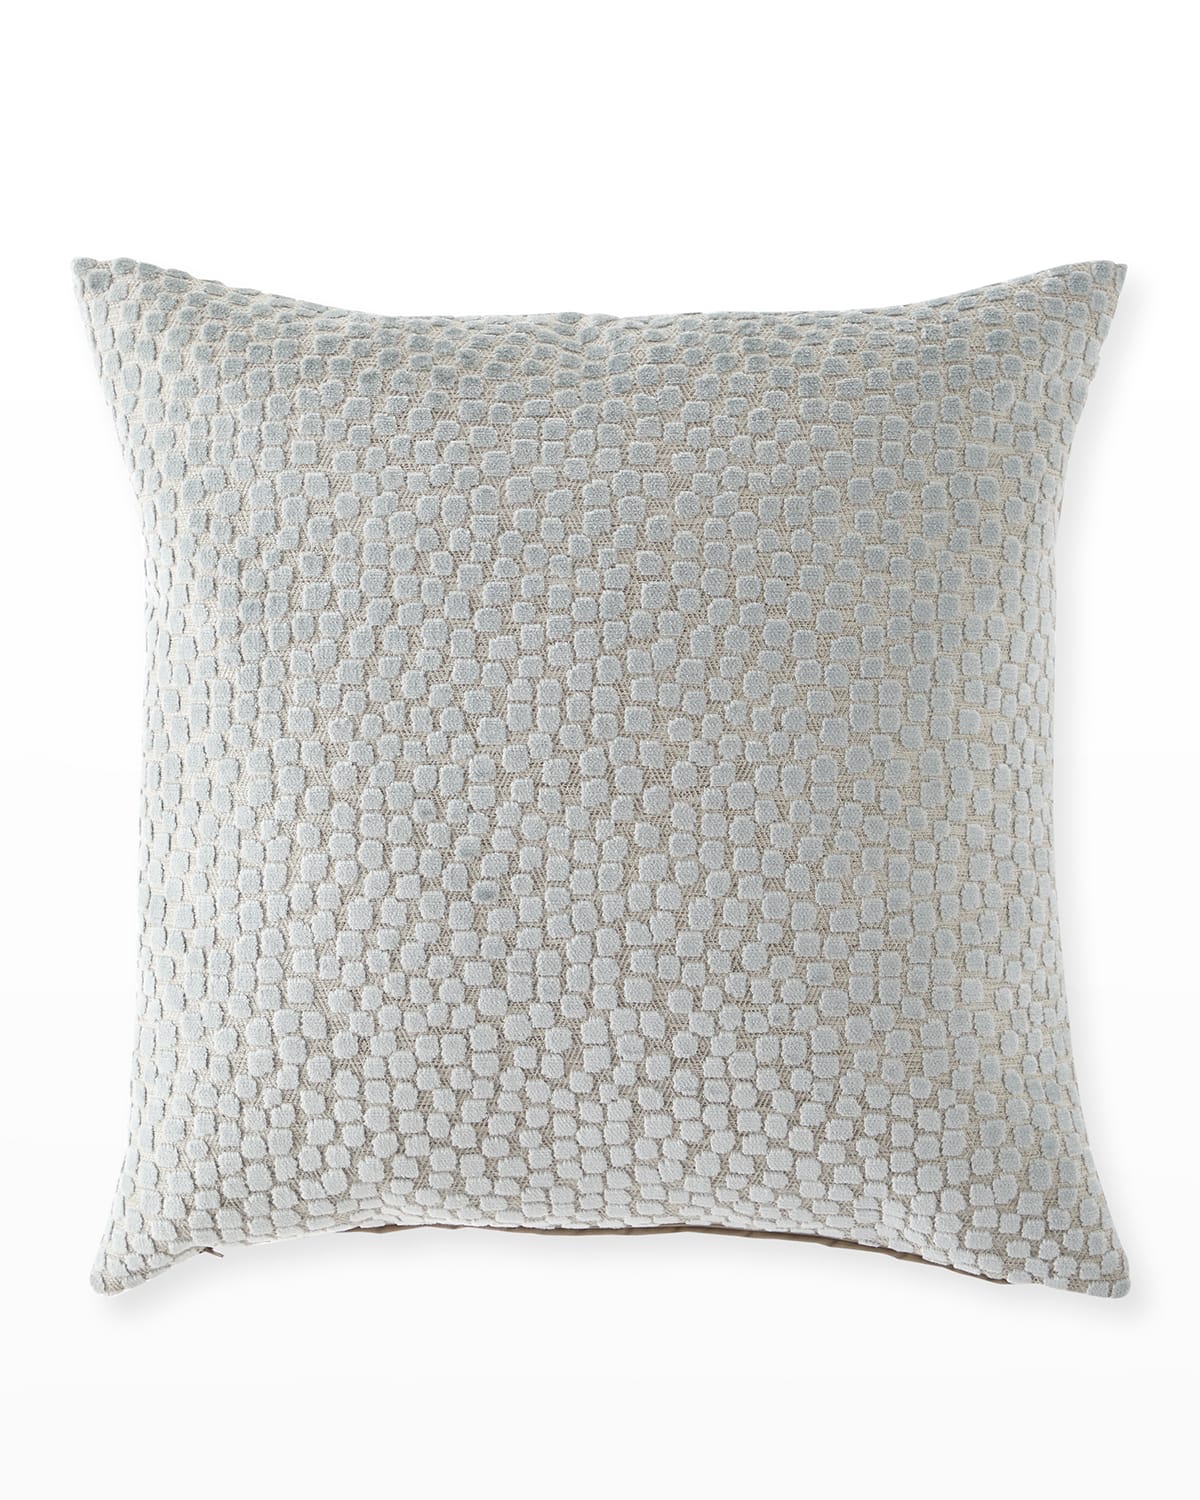 Shop Eastern Accents Smolder Decorative Pillow, Spa - 22"